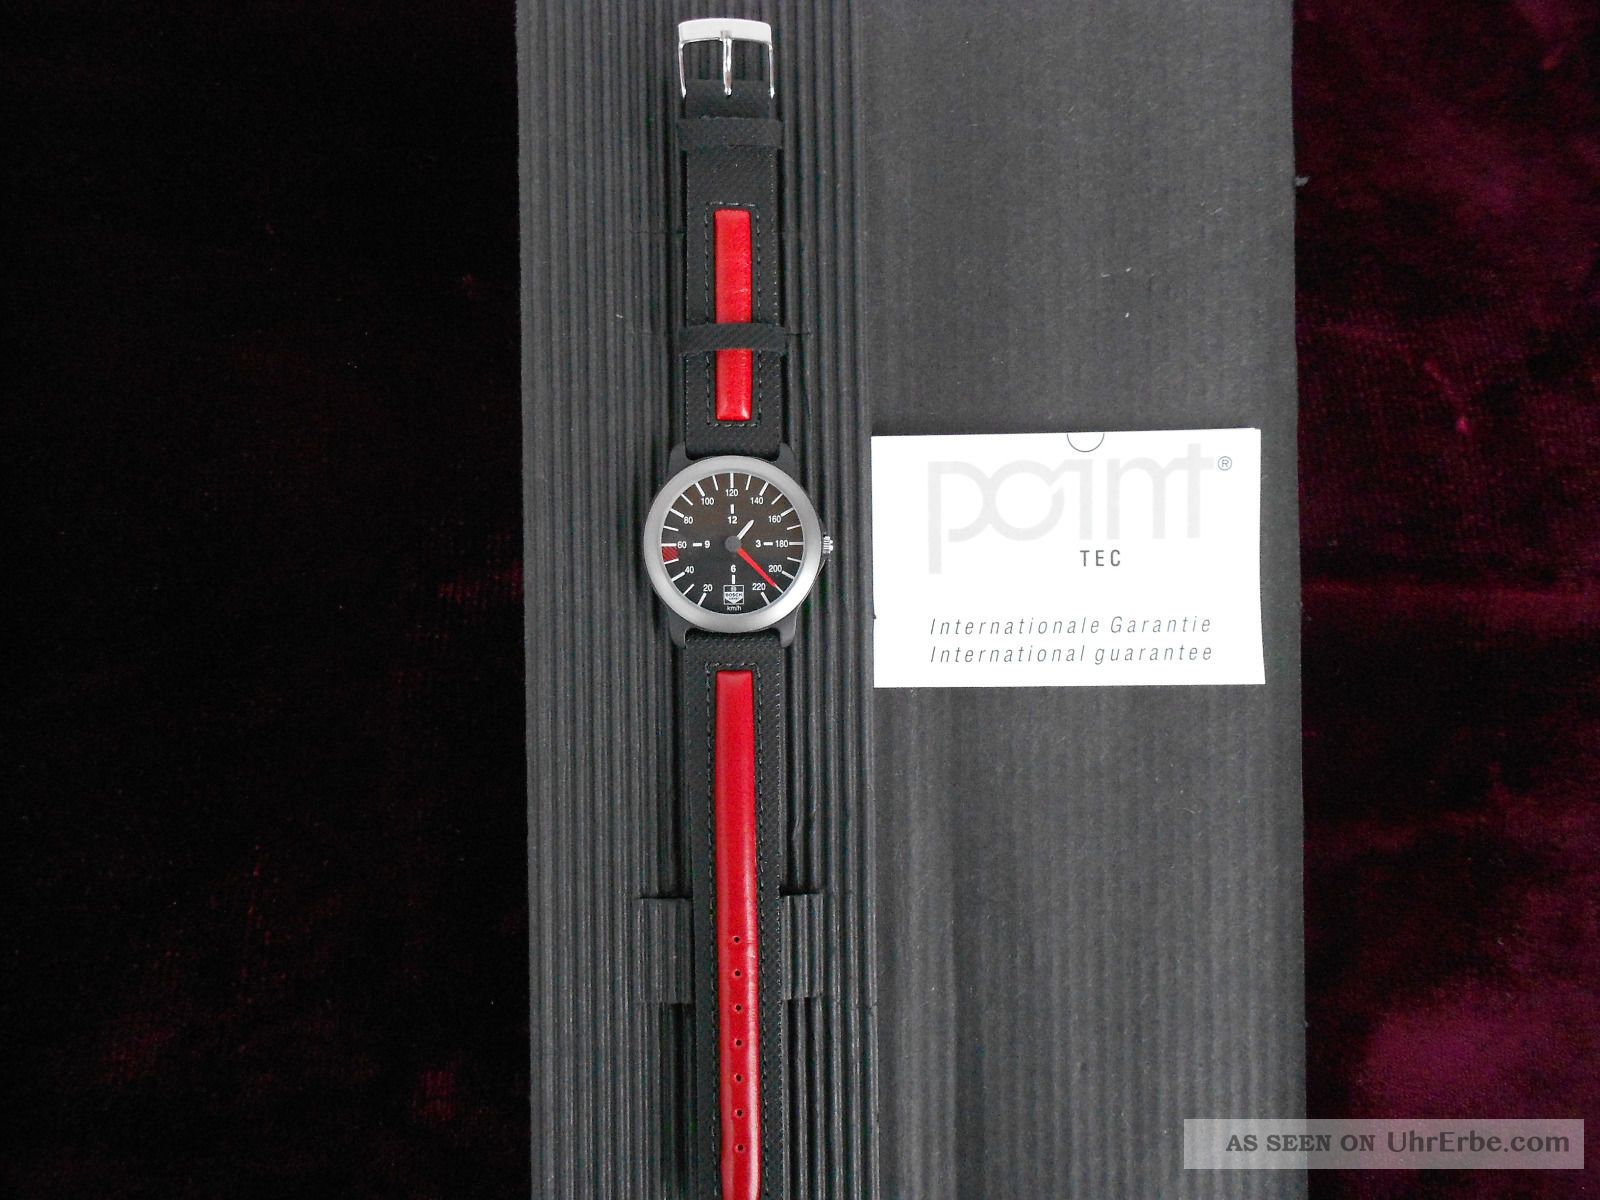 Bosch Editionsuhr Im Porsche - Tacho Look Armbanduhren Bild